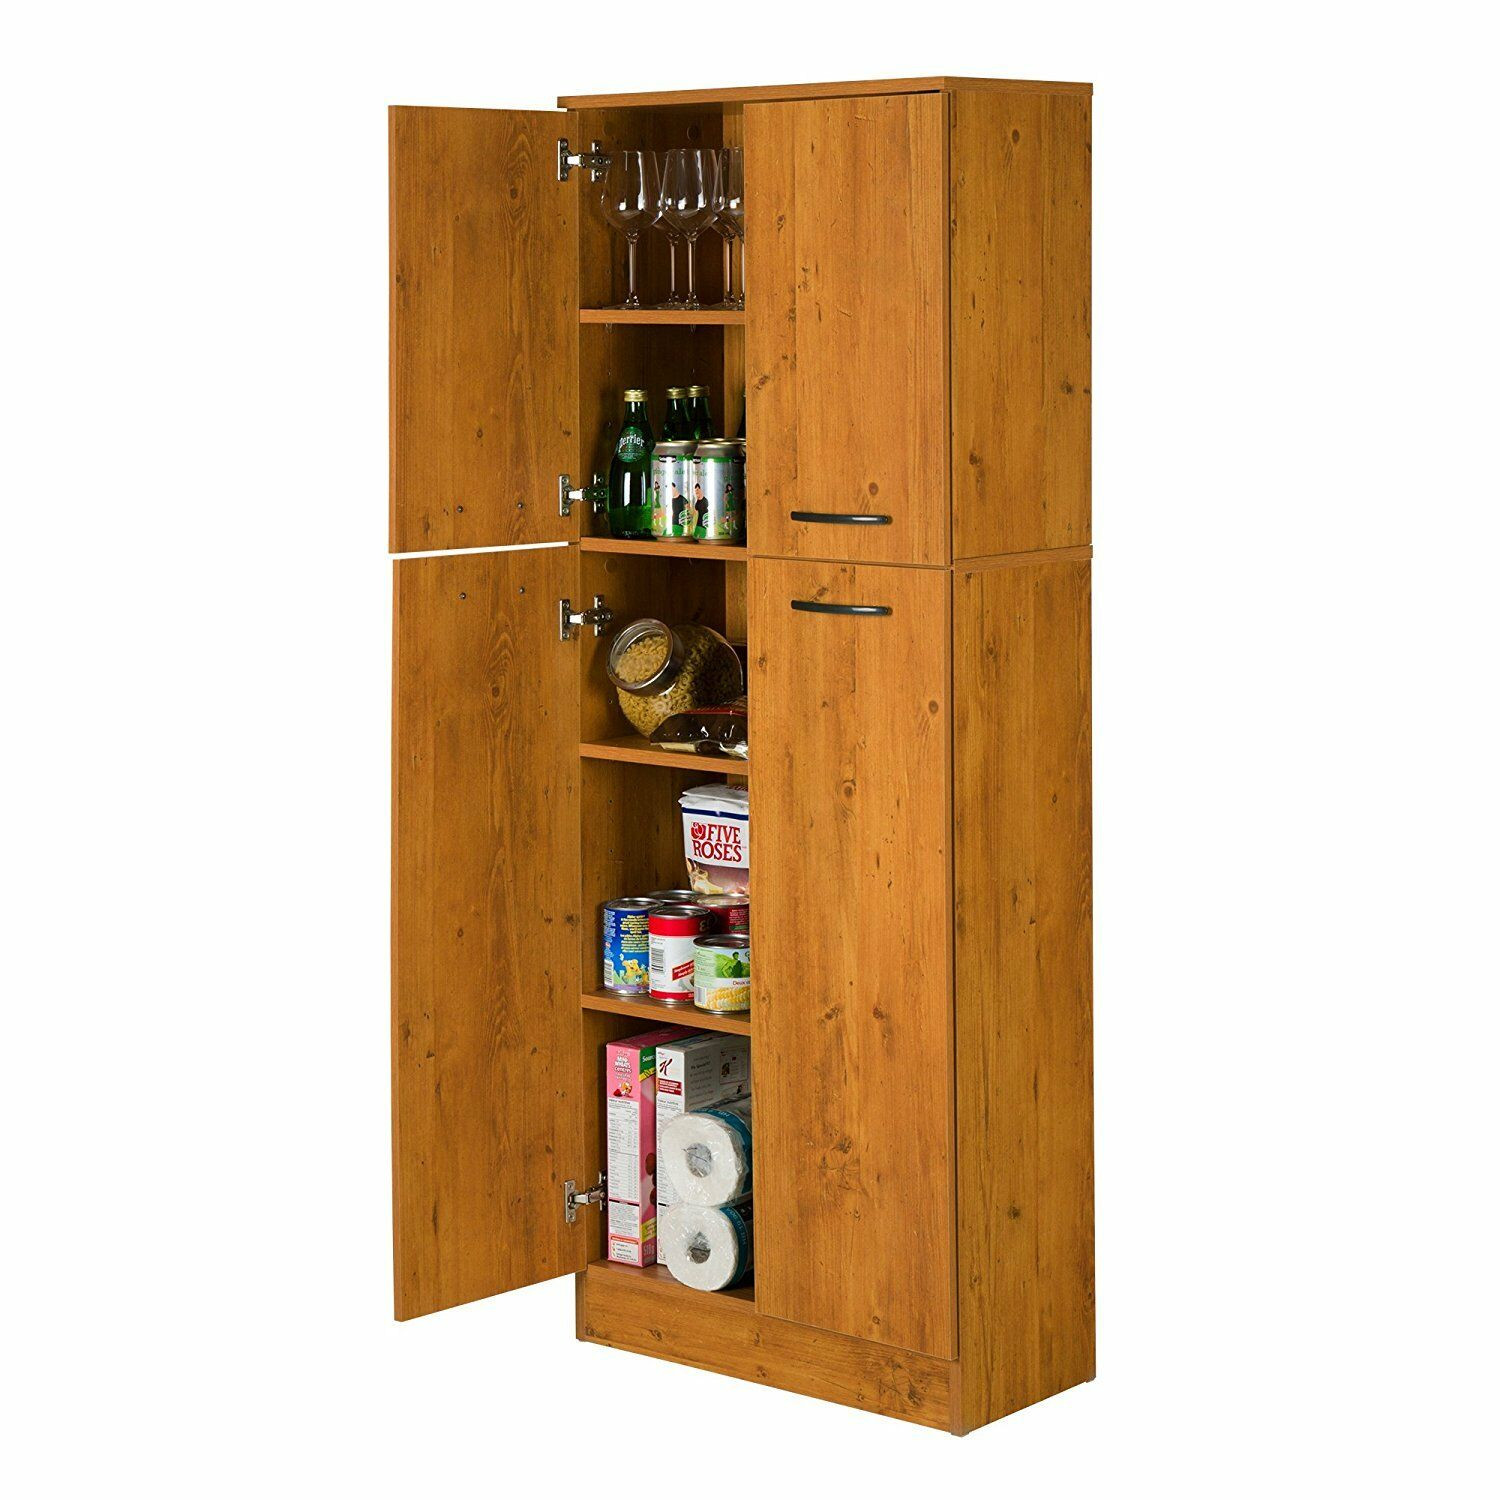 Large Kitchen Storage Cabinets
 Wooden Pantry Utility Storage Cabinet 4 Door 5